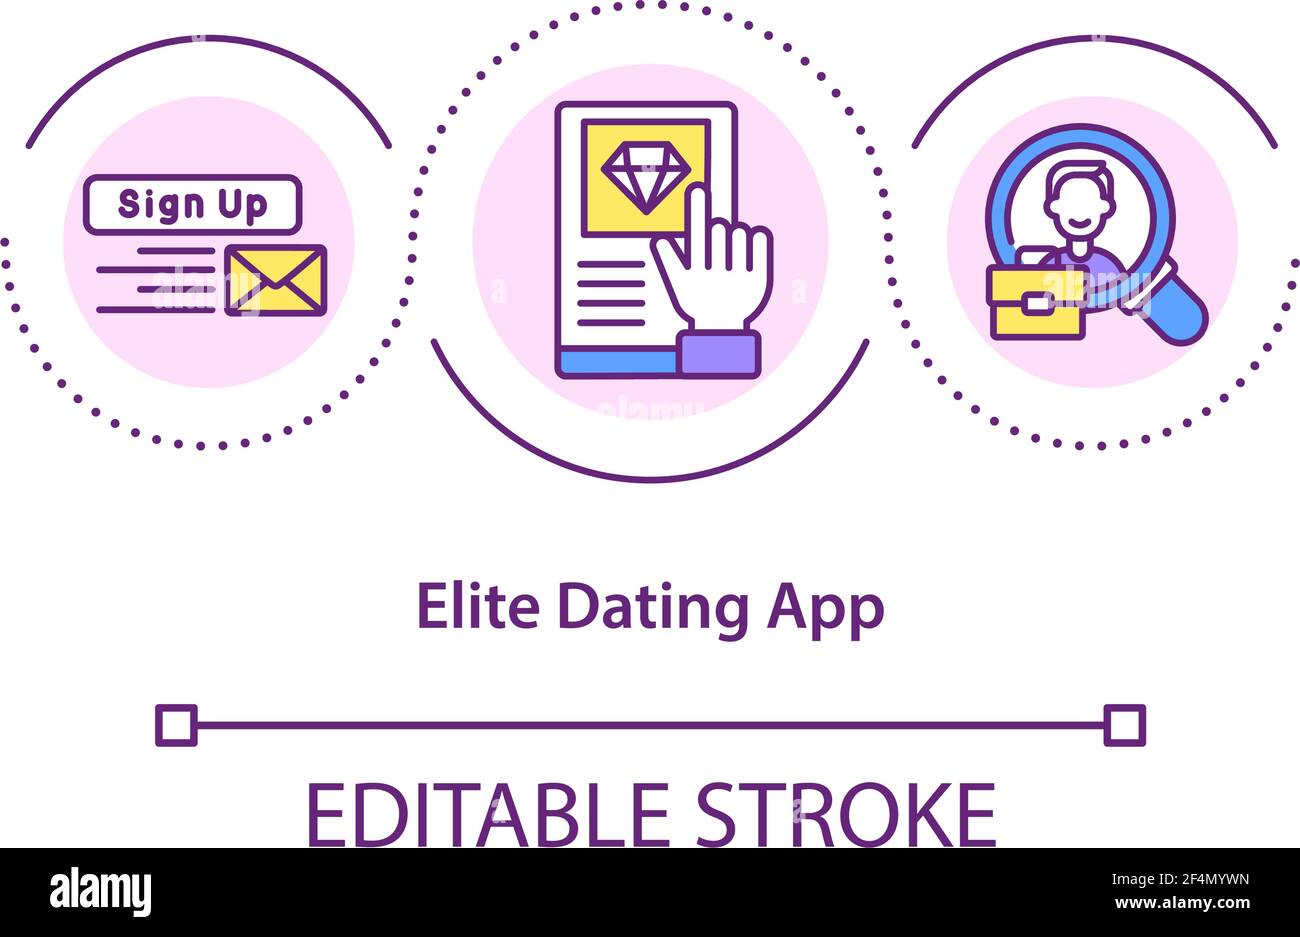 Elite dating app concept icon Stock Vector